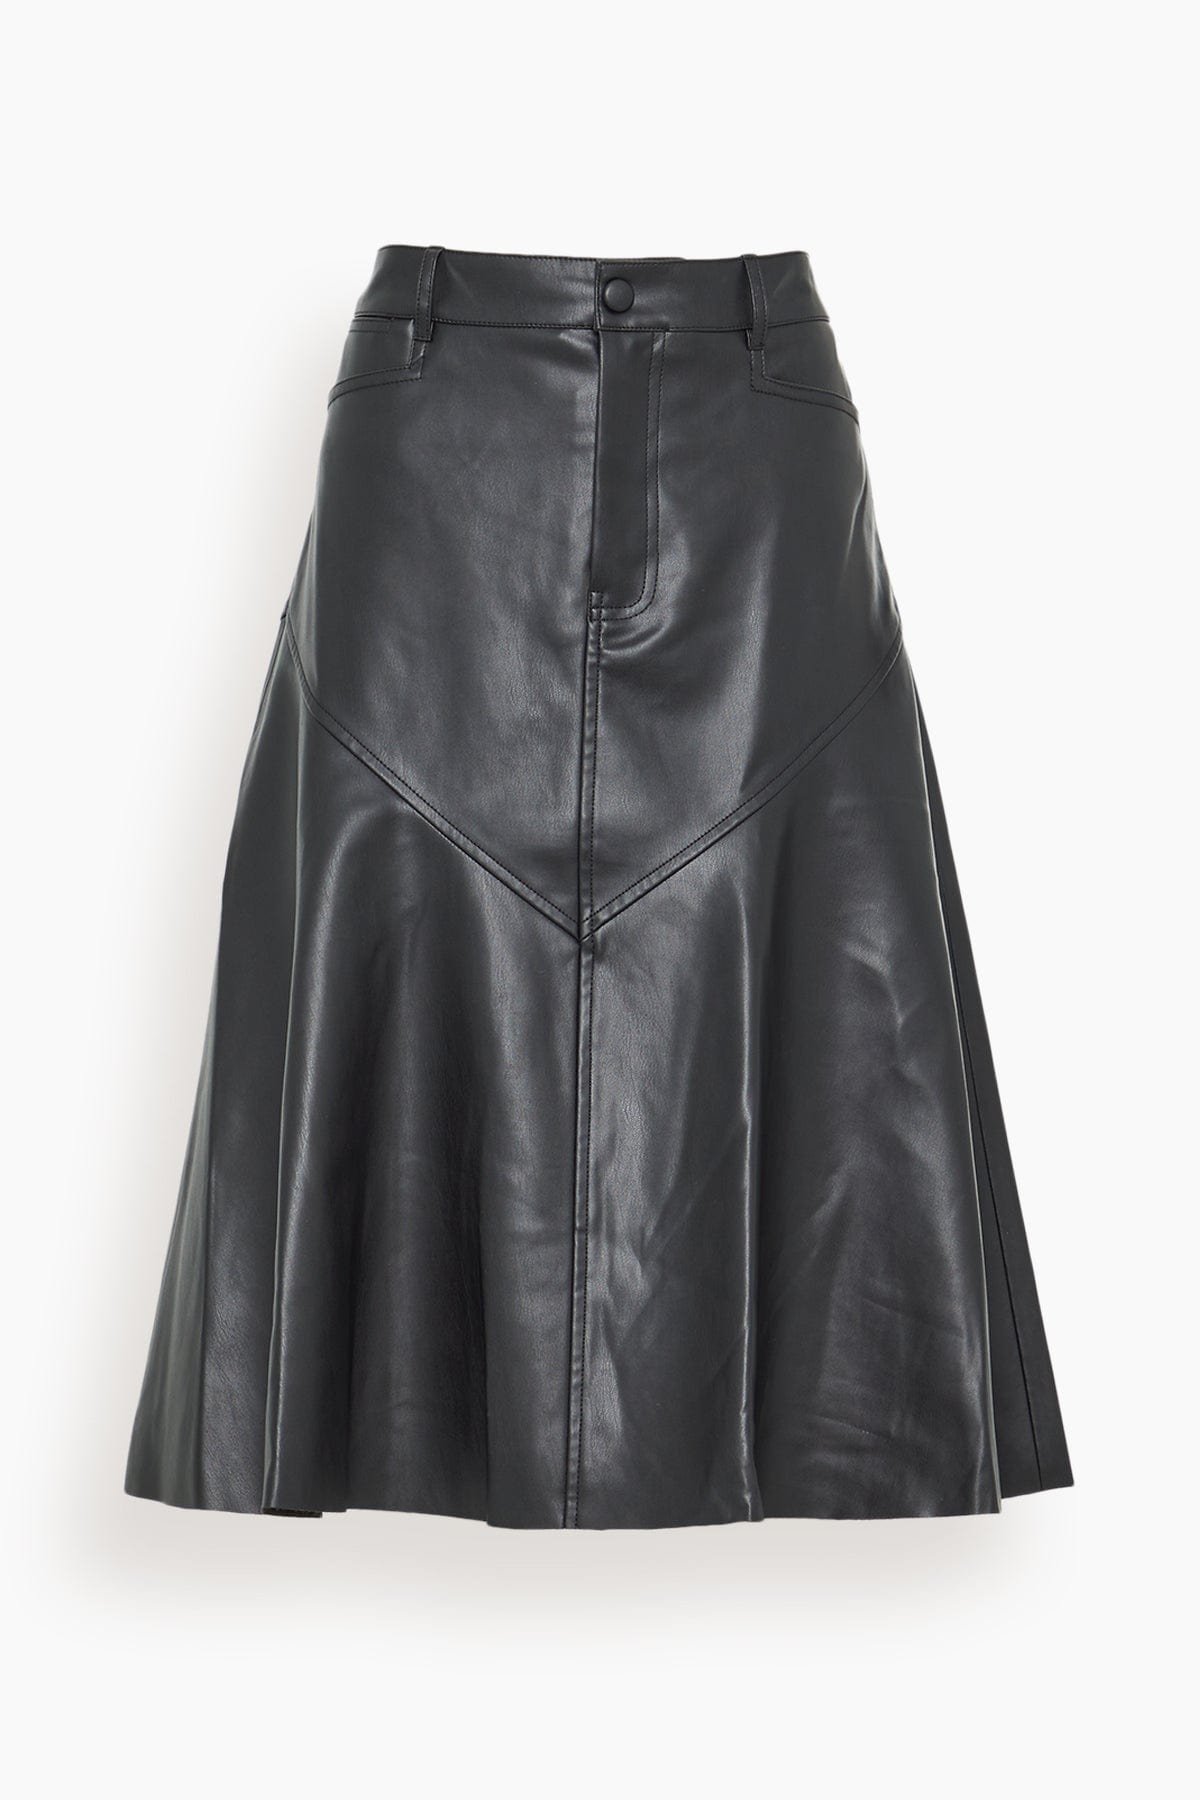 Proenza Schouler White Label Jesse Skirt in Black - Black - Size: 4